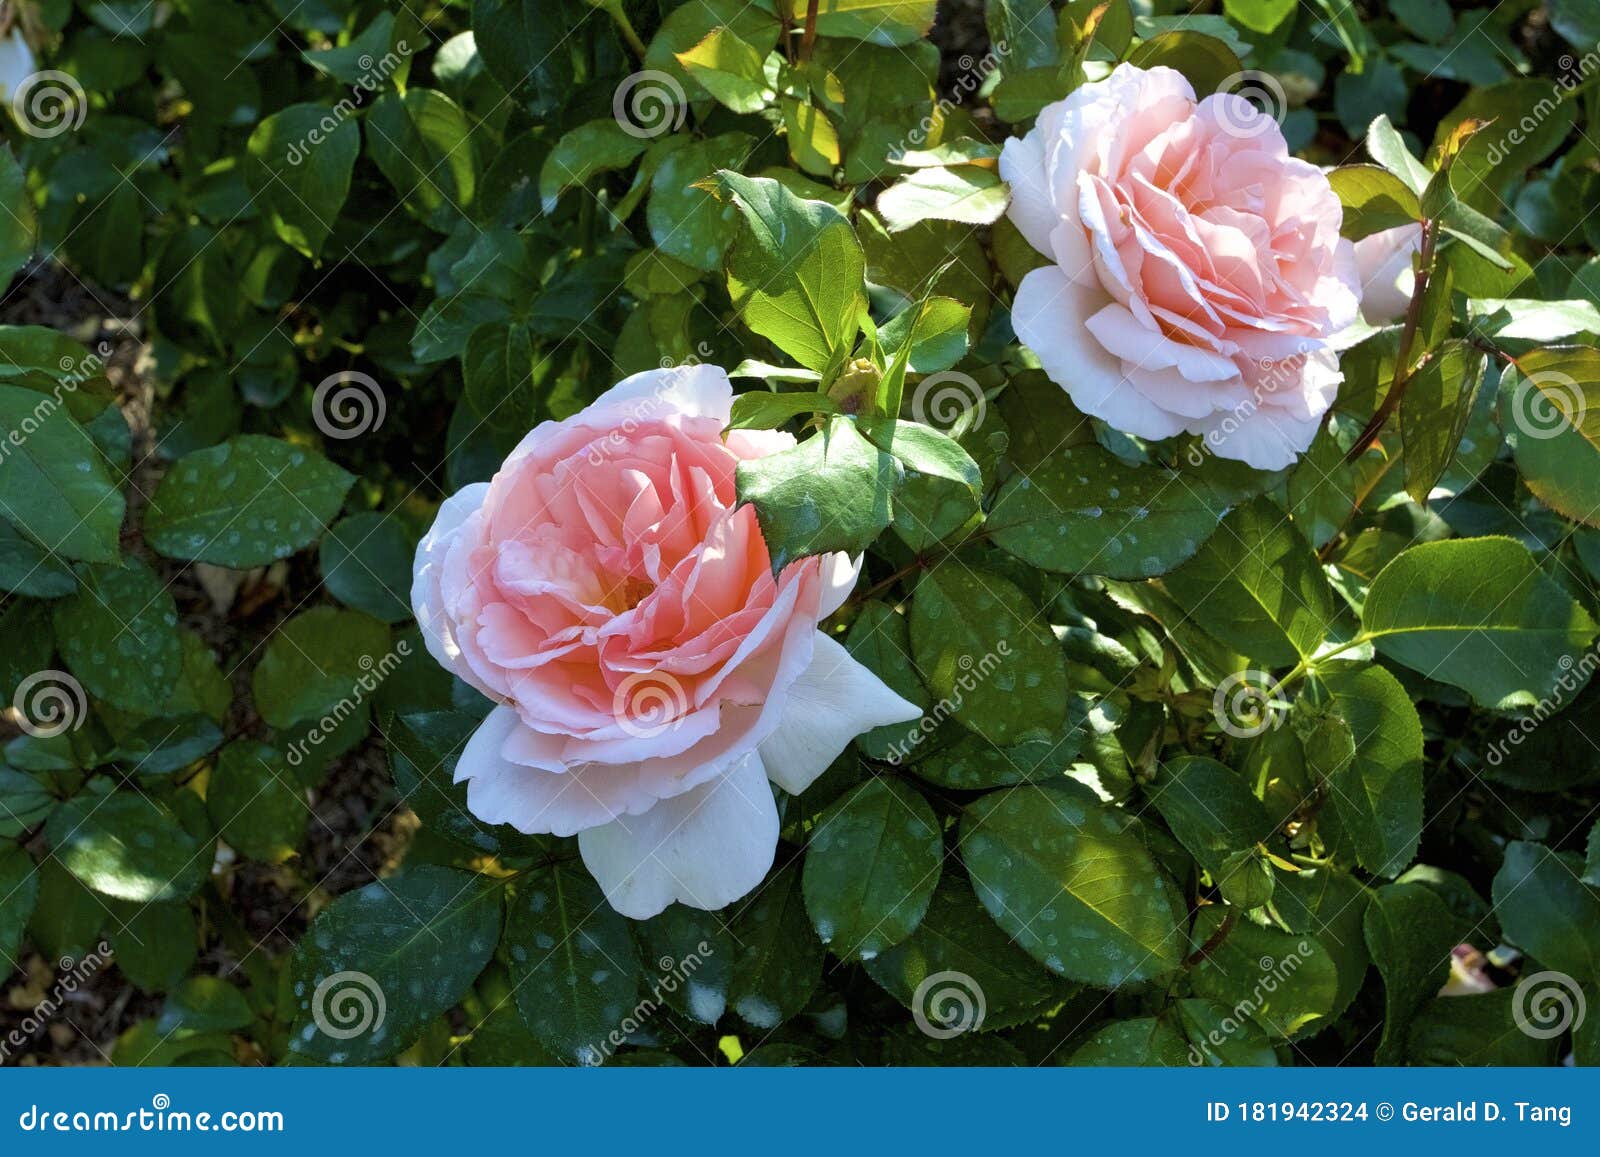 Betty White Tea Rose 823102 Stock Photo - Image of illinois, growing ...